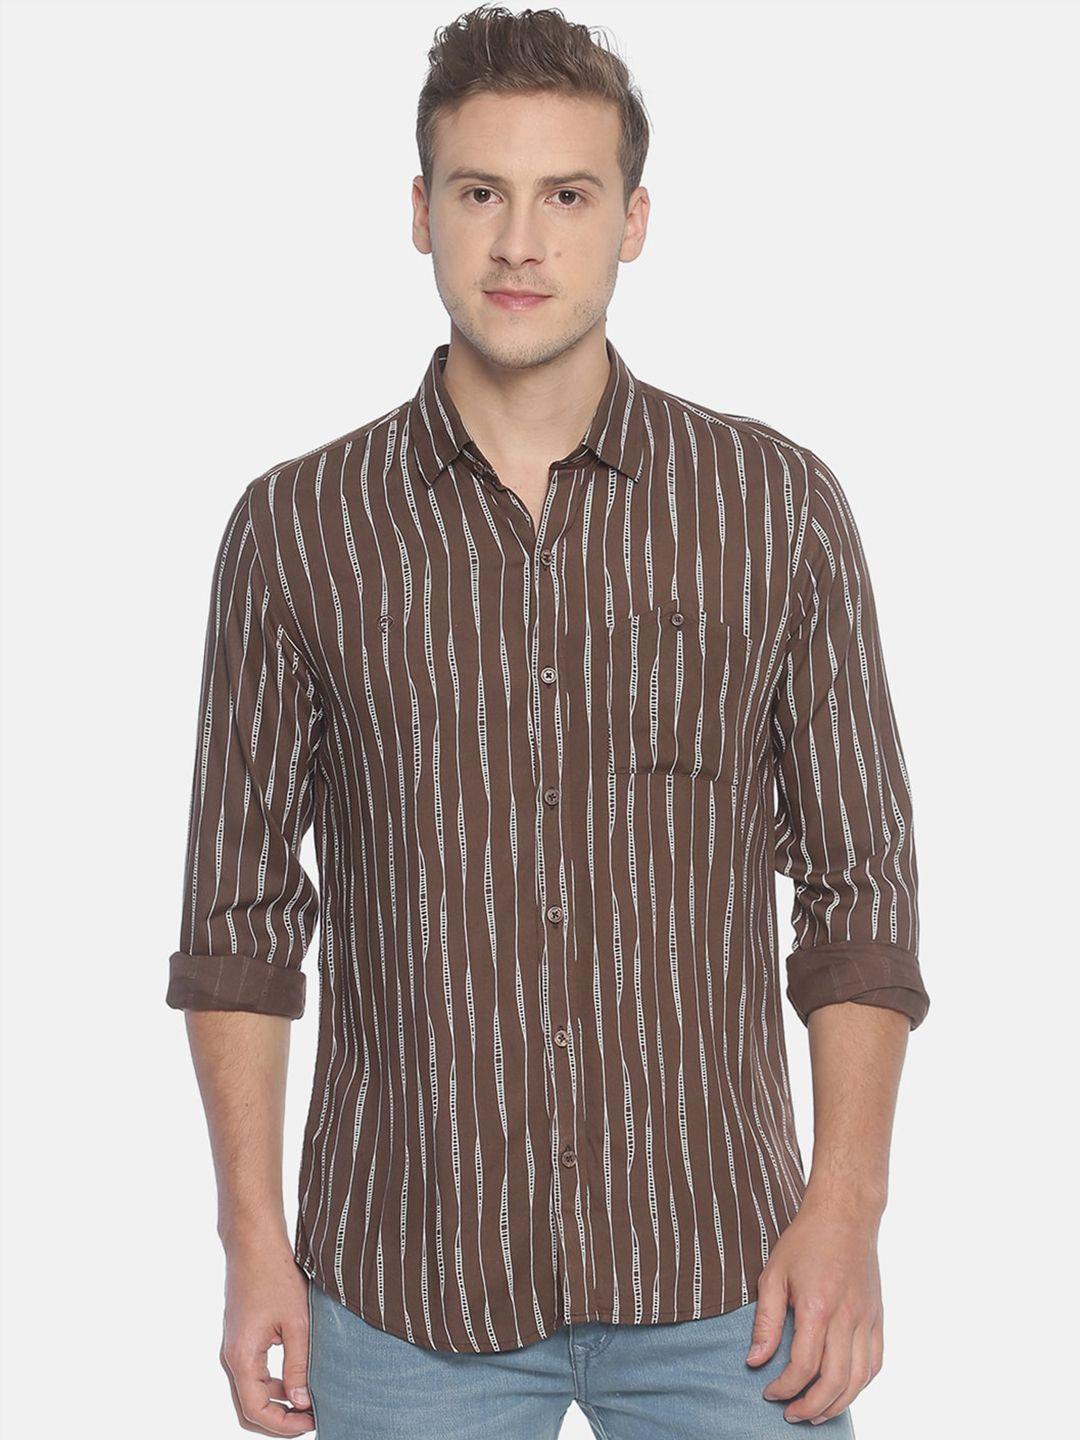 couper & coll men brown premium slim fit striped cotton casual shirt